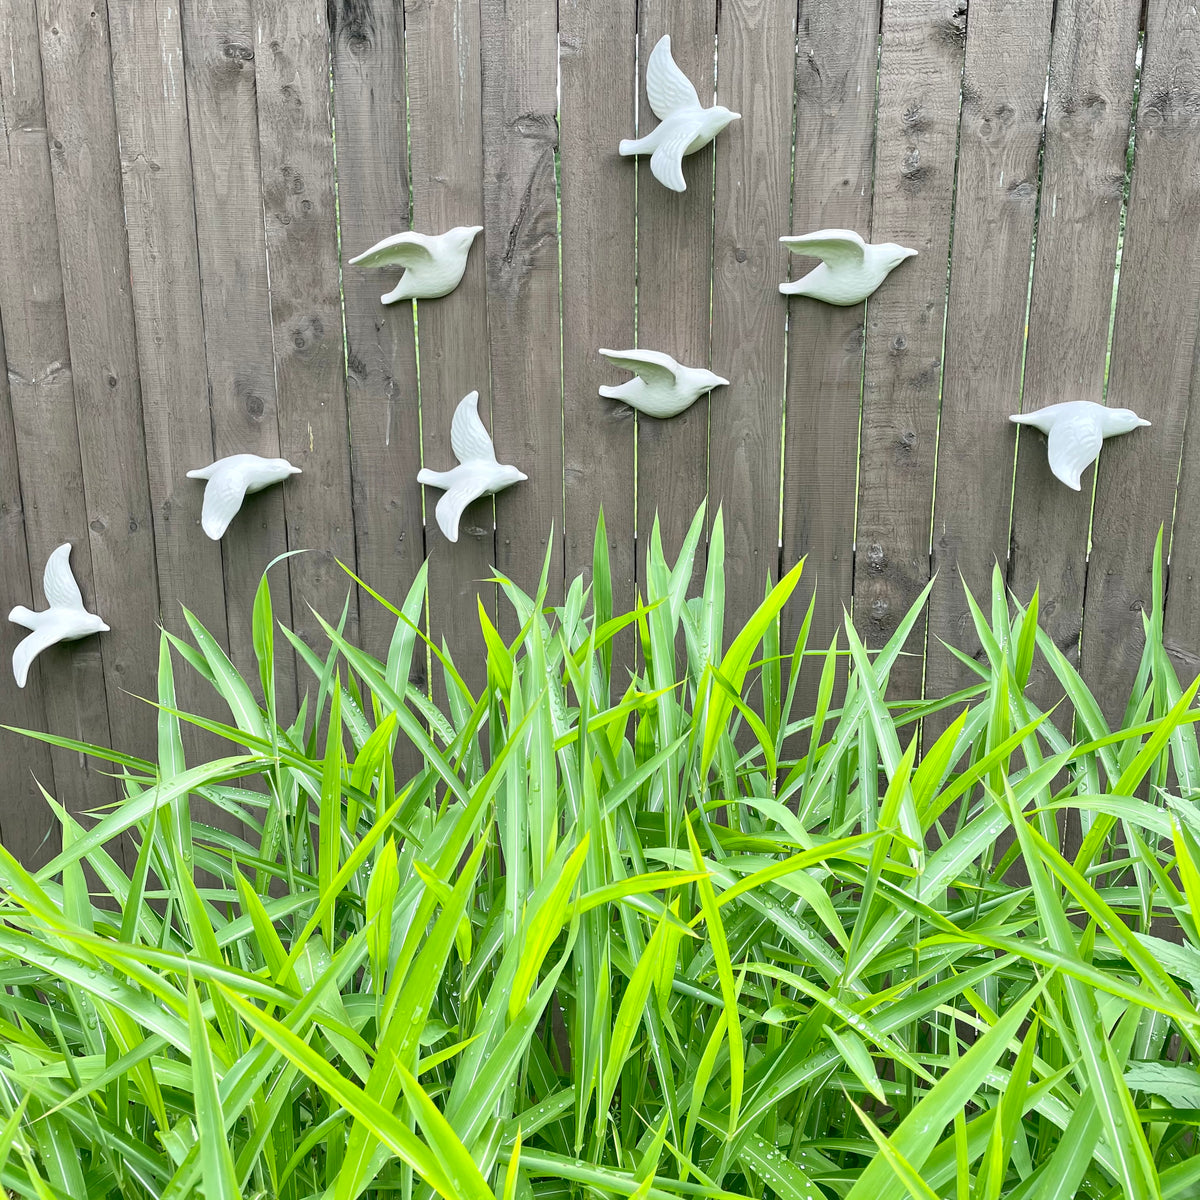 Flying Ceramic Birds